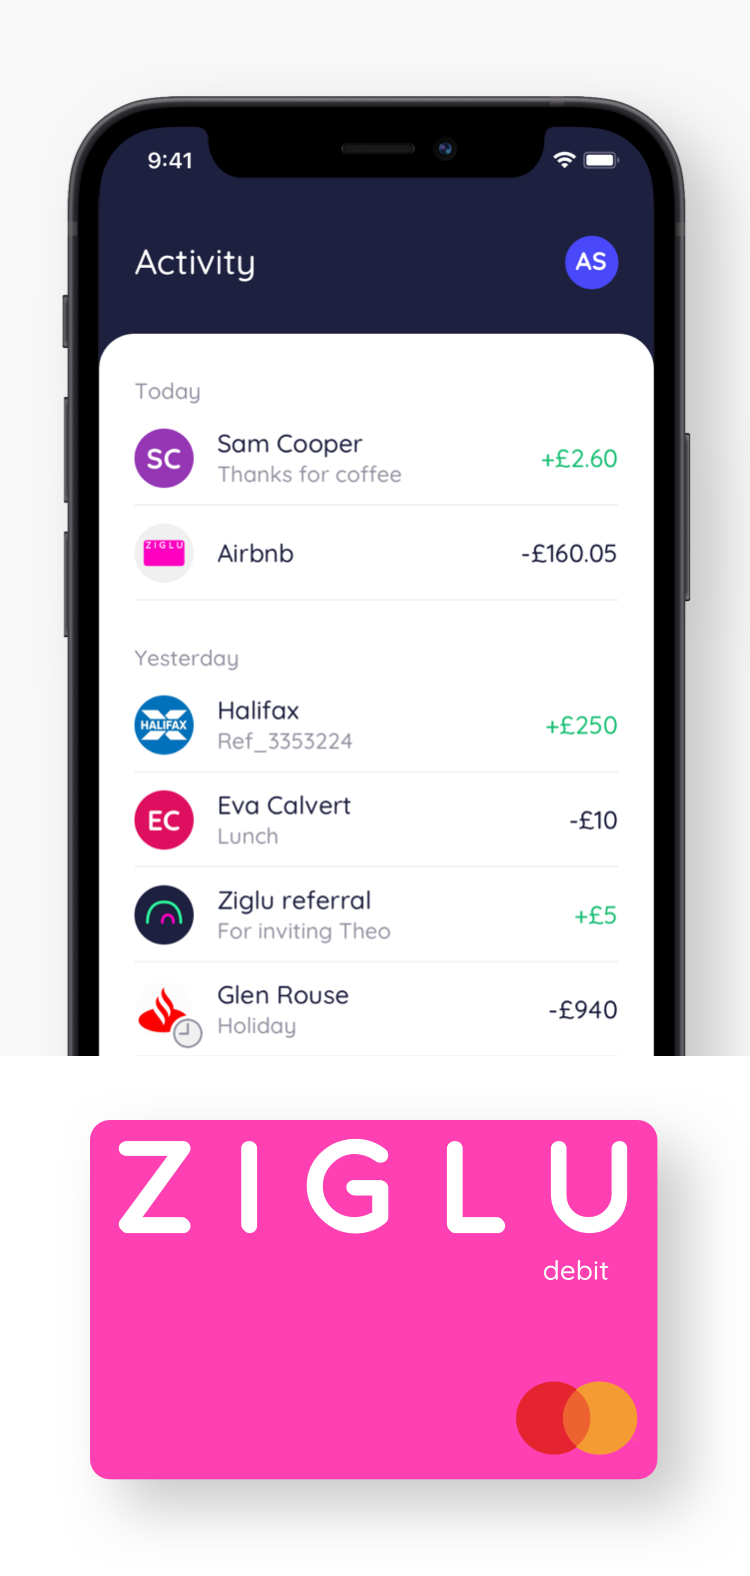 Ziglu app activity page and debit card